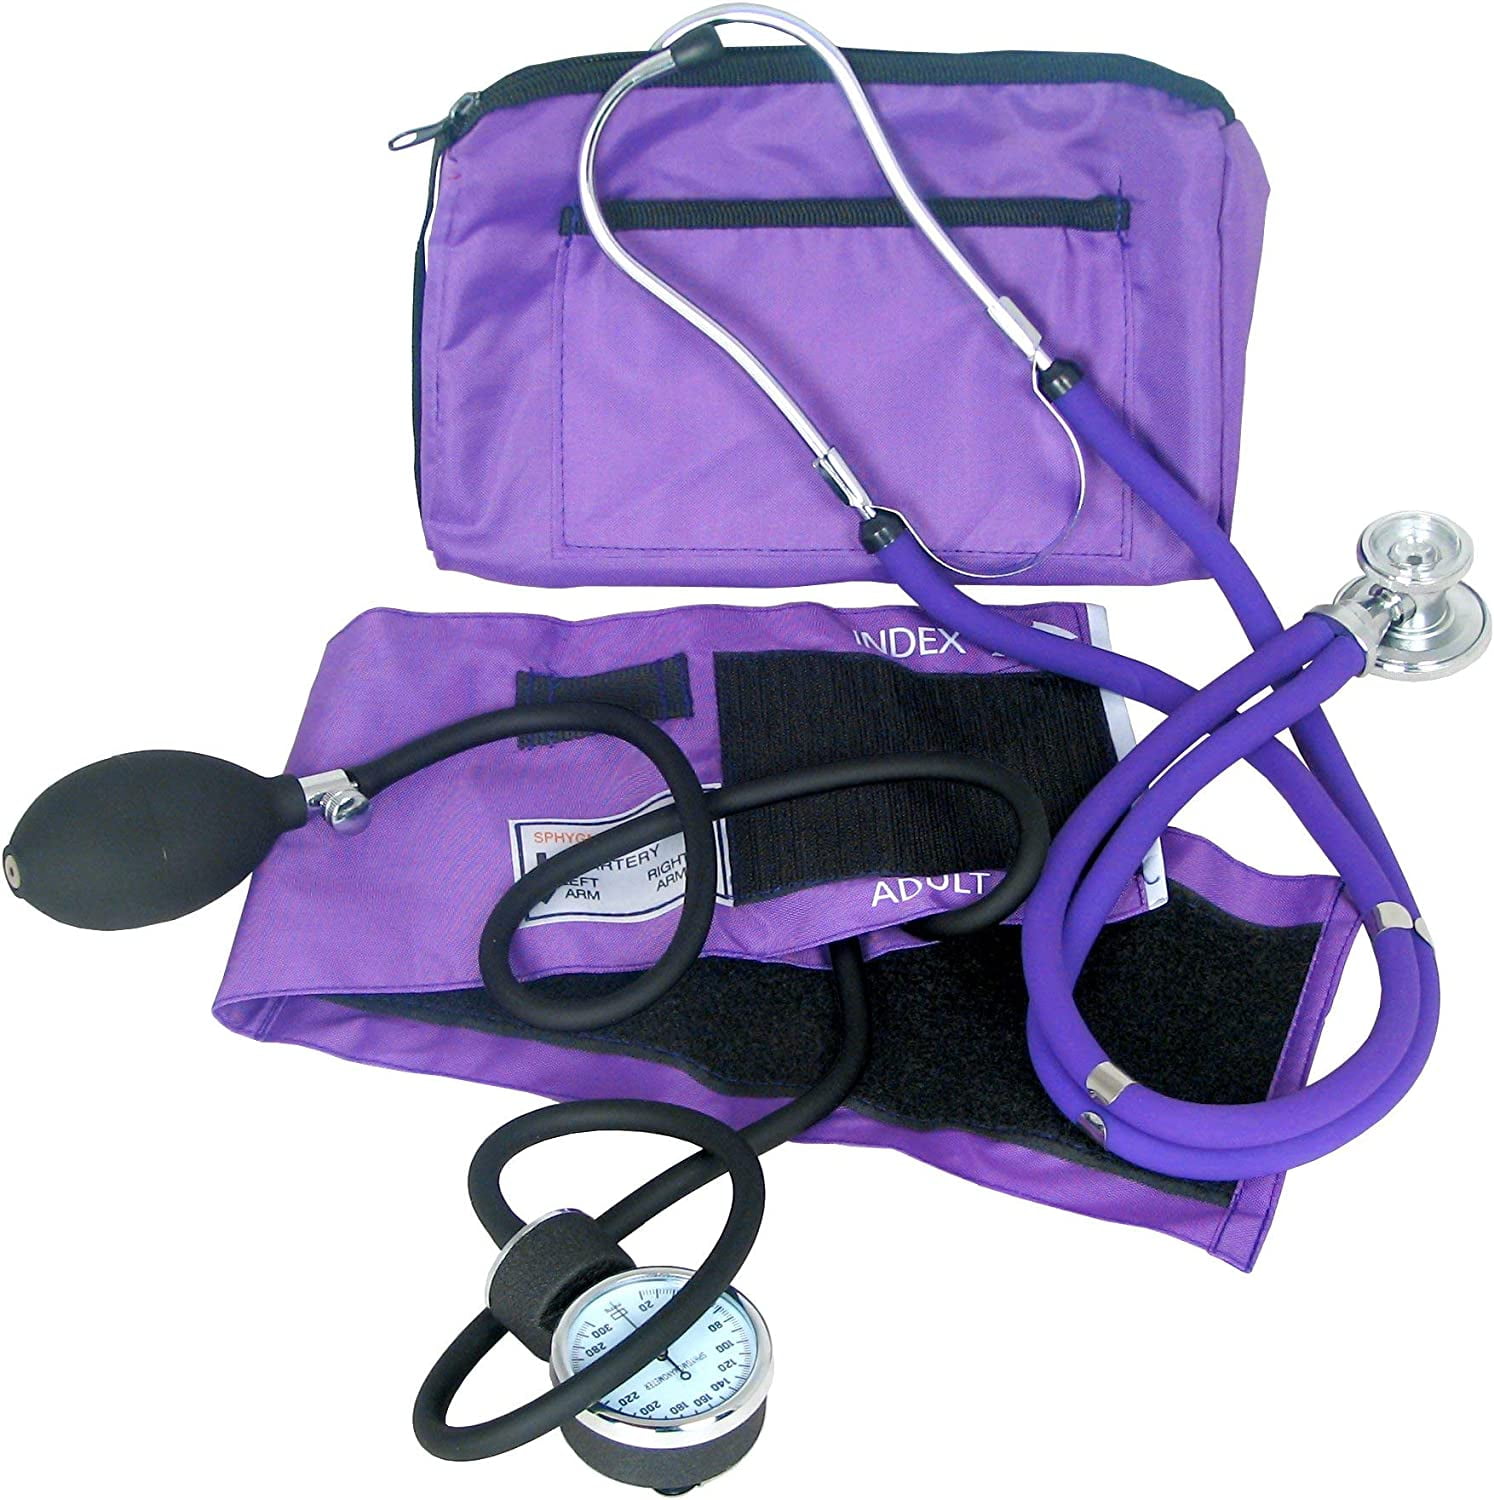 BP Cuff, Match Set and Matching Stethoscope, - Penn Care, Inc.